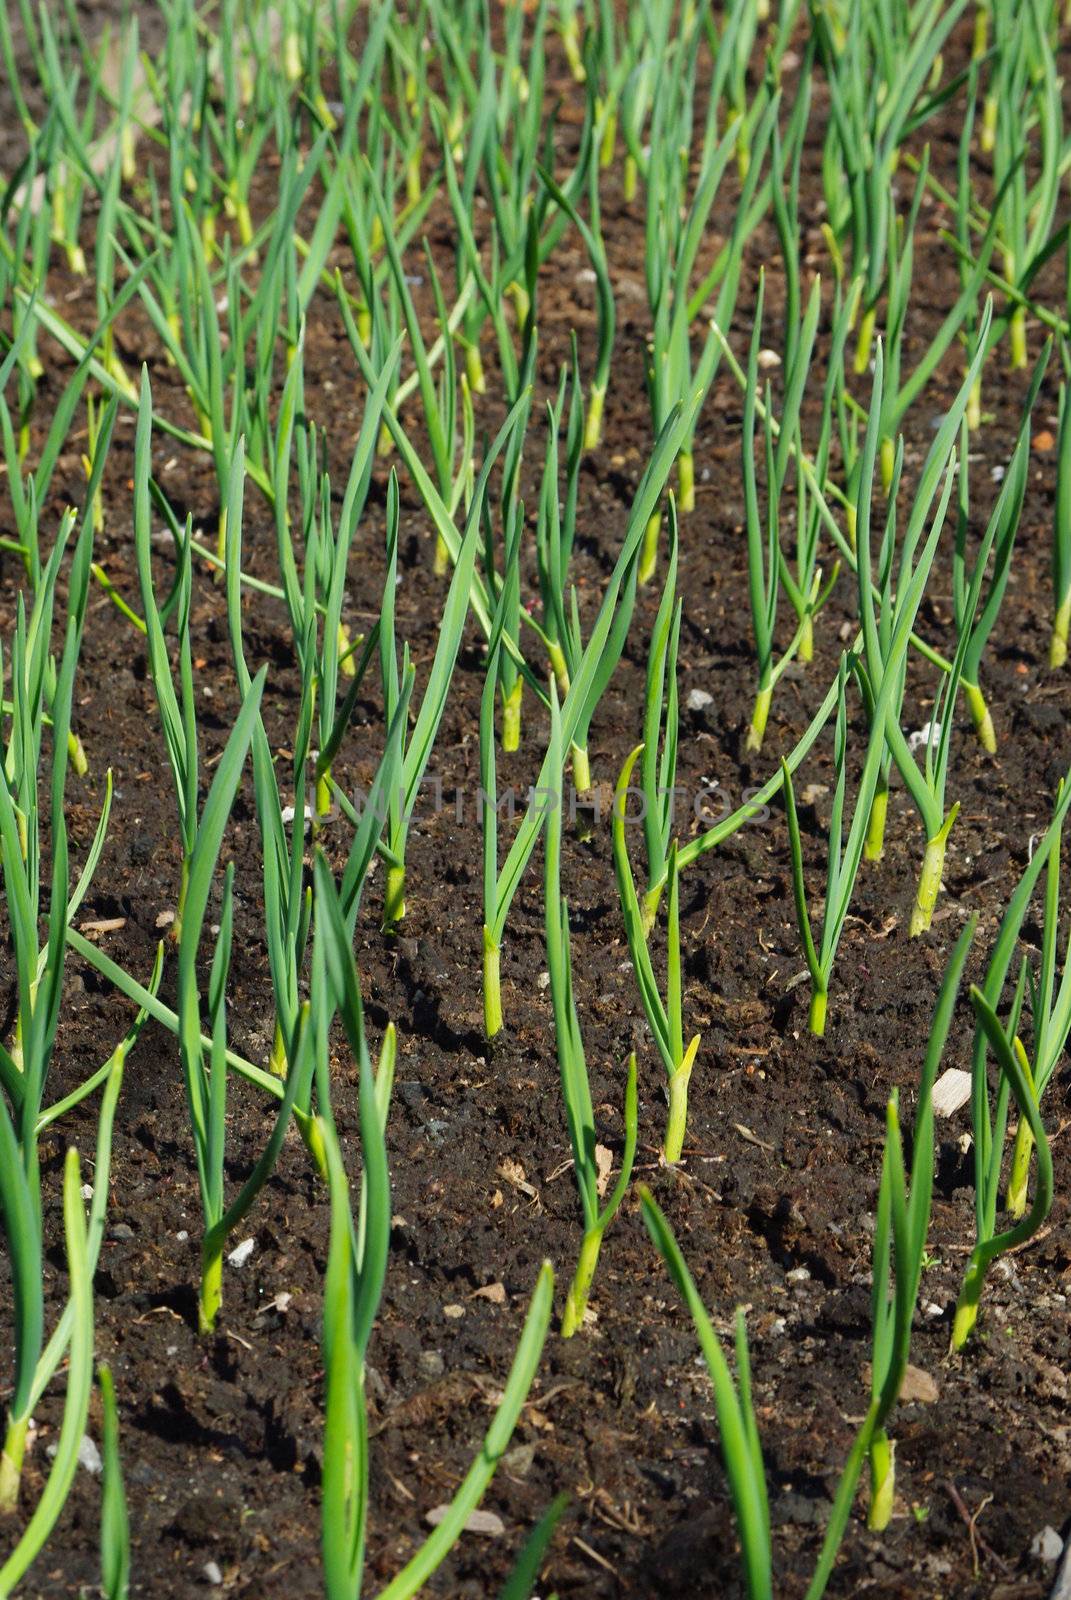 Rows of garlic plants seedlings in spring garden bed